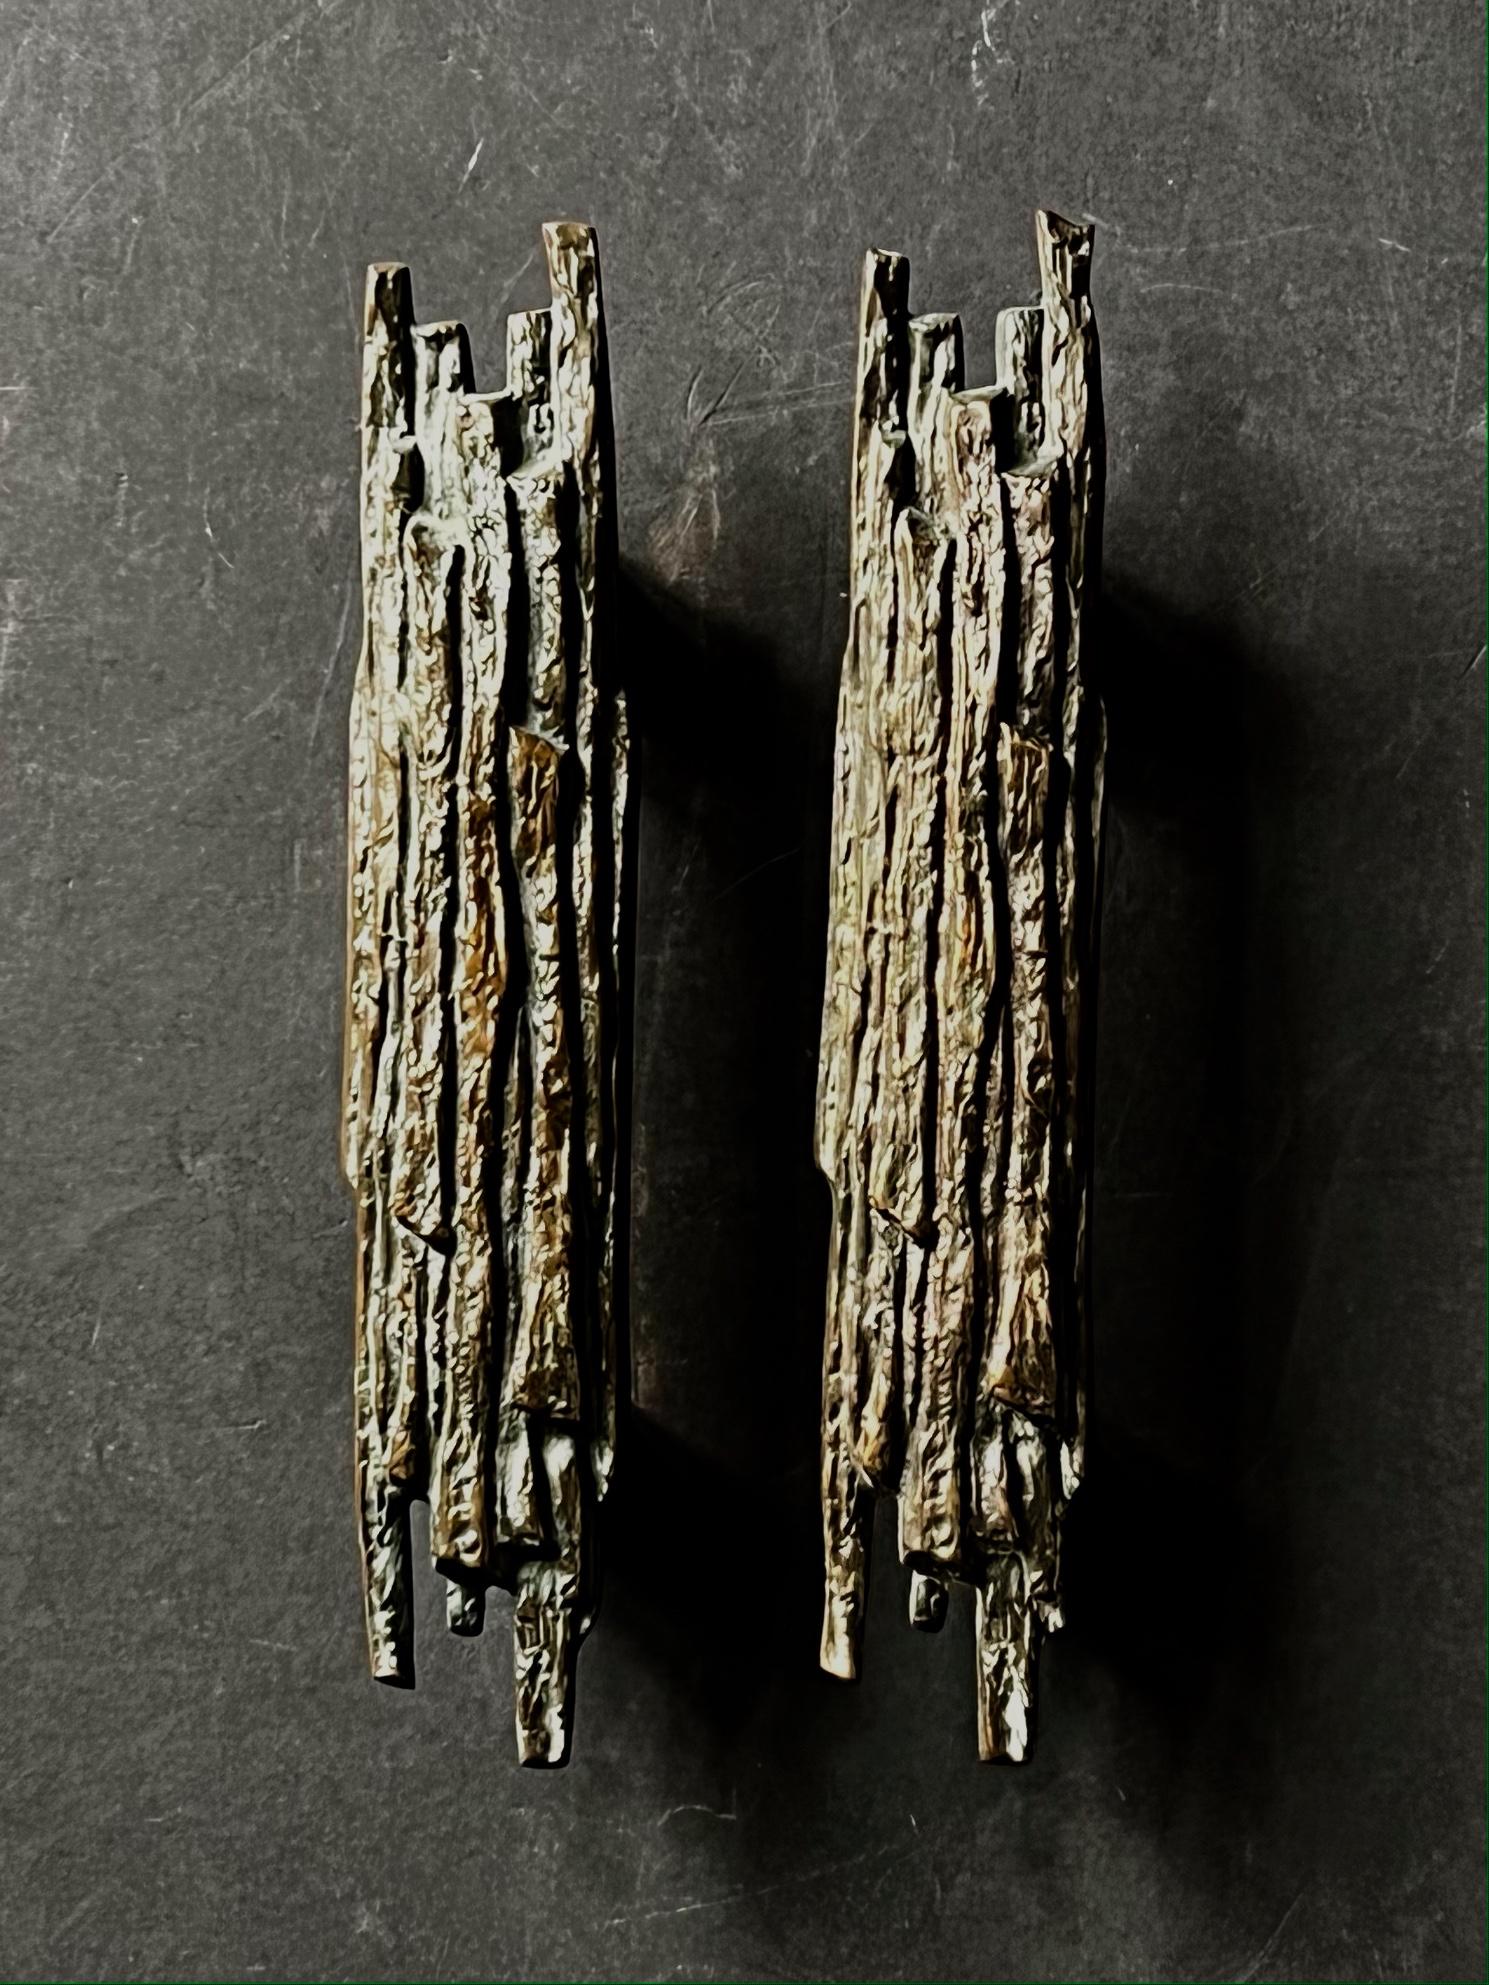 Narrow Bronze Handle with Tree Bark or Rock Design 1